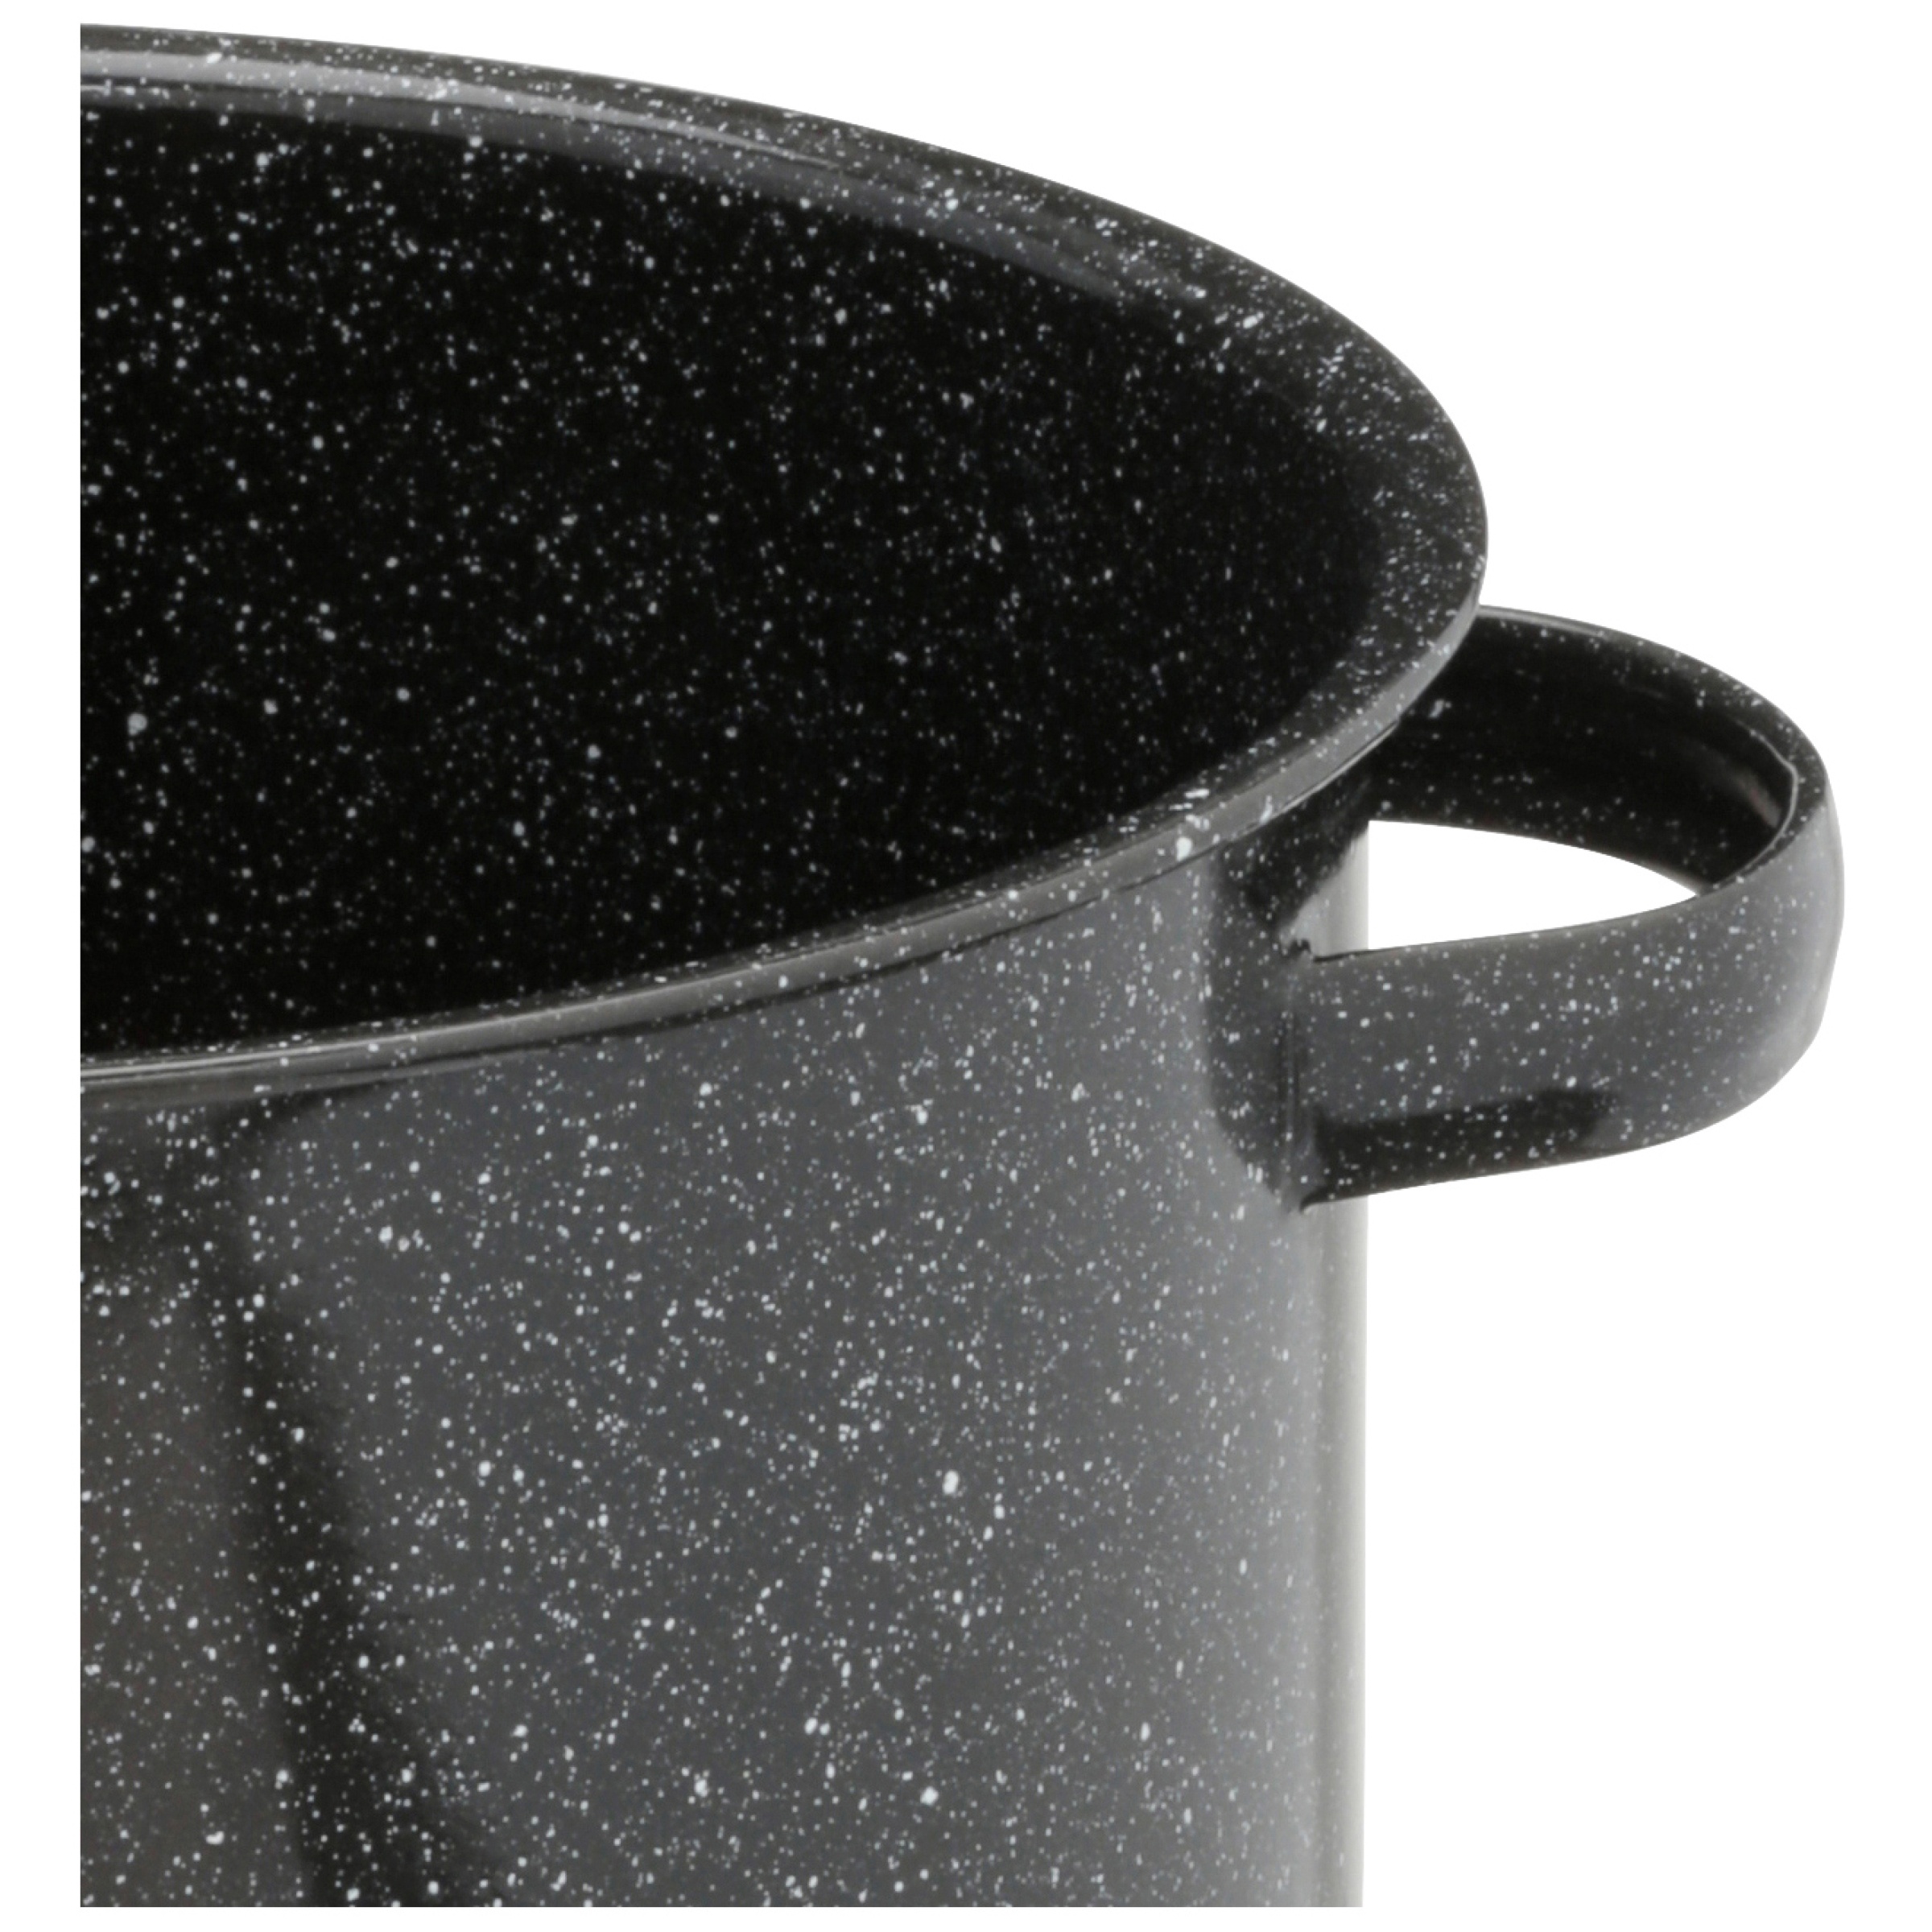 Granite-Ware Enamel on Steel 12 Quart Stock Pot with Lid - Black - image 4 of 5